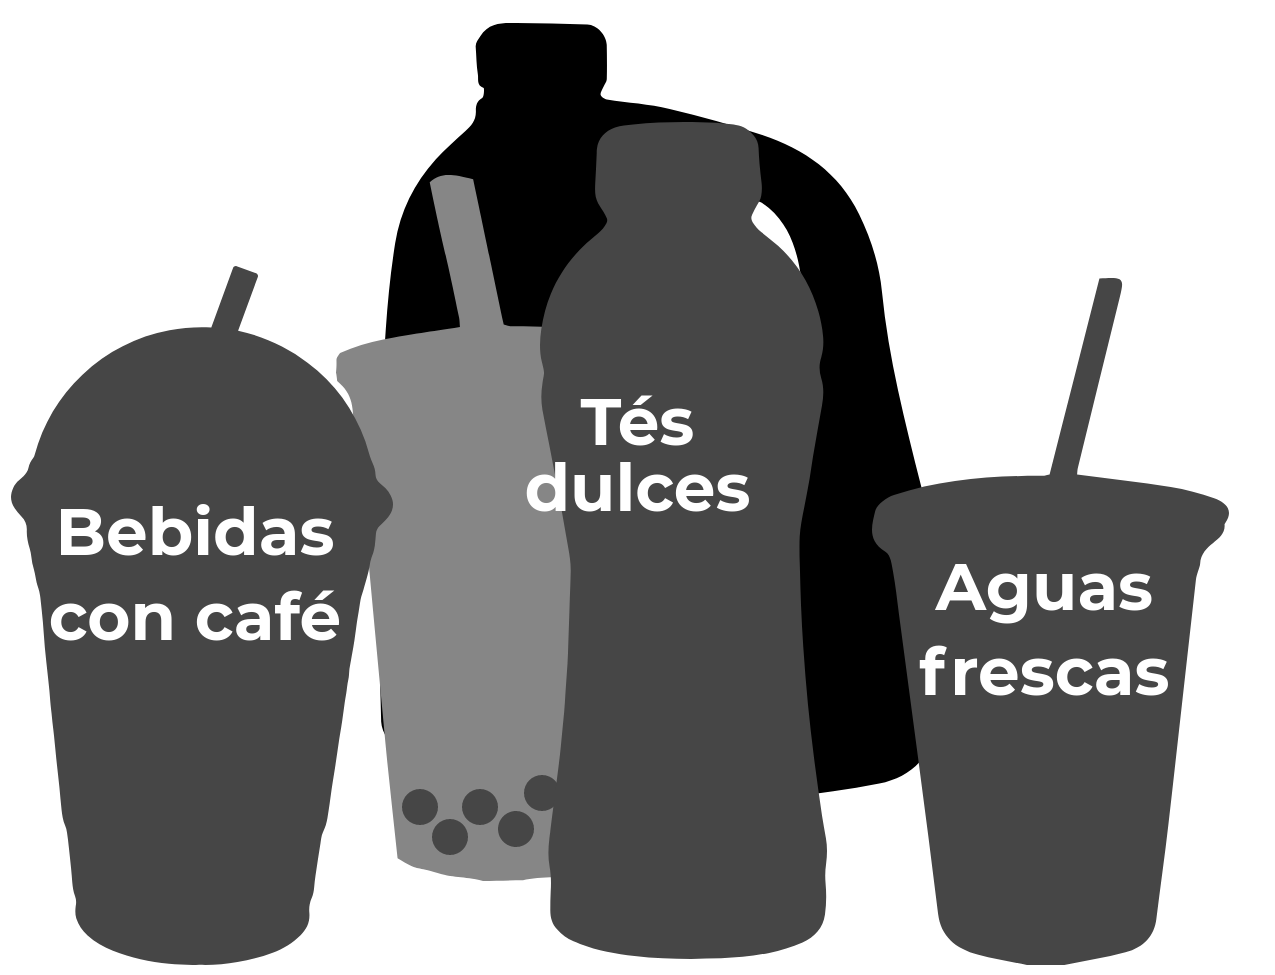 Coffee drinks, sweet teas, aguas frescas